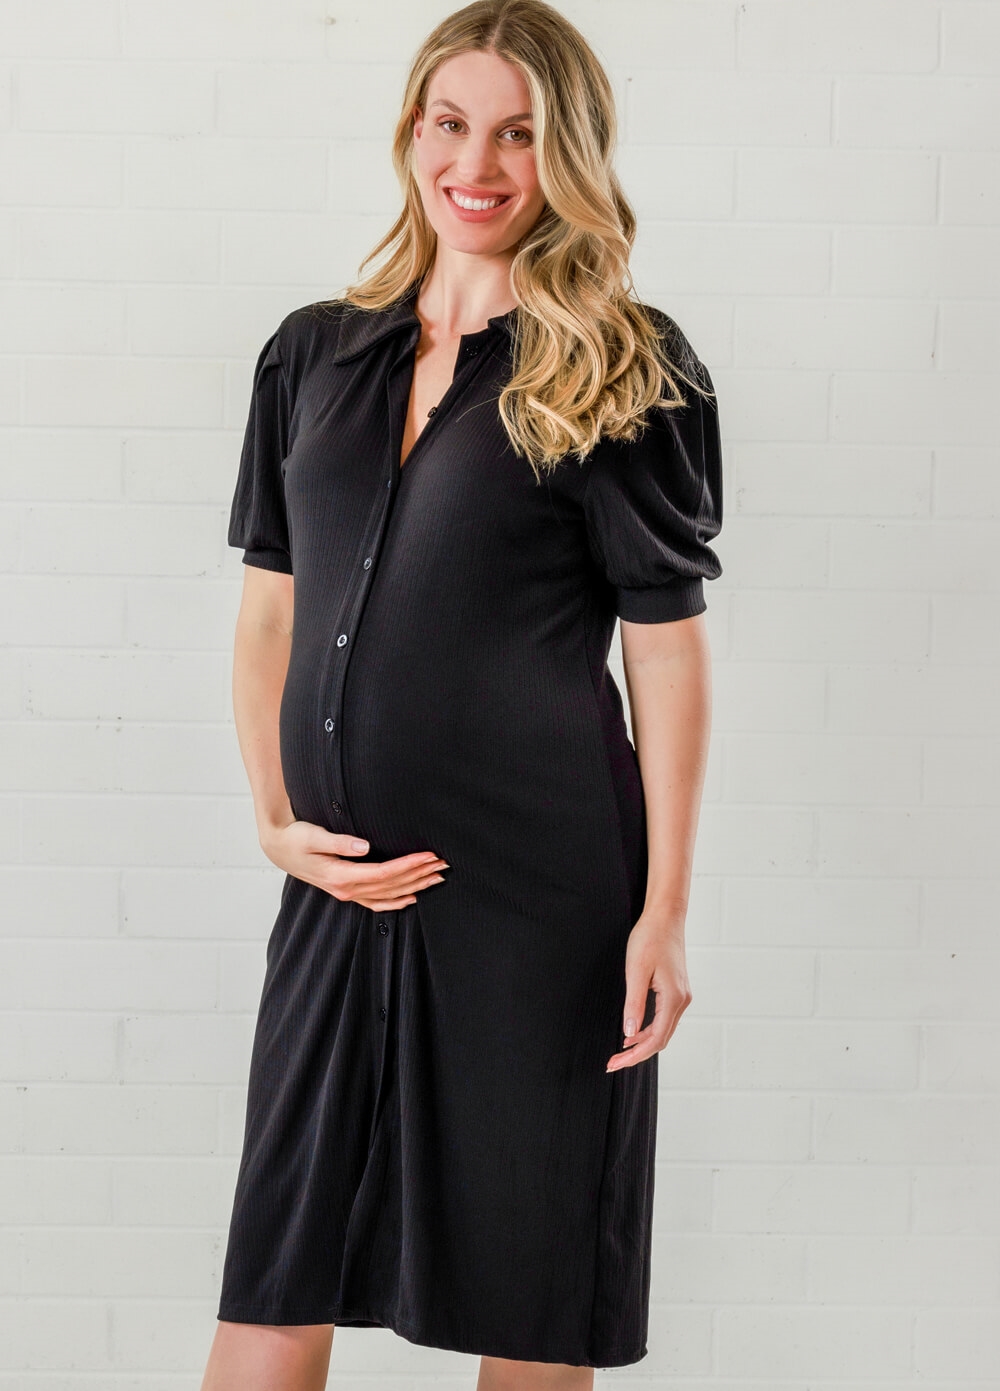 Lait & Co - Christiane Ribbed Maternity Shirt Dress in Black